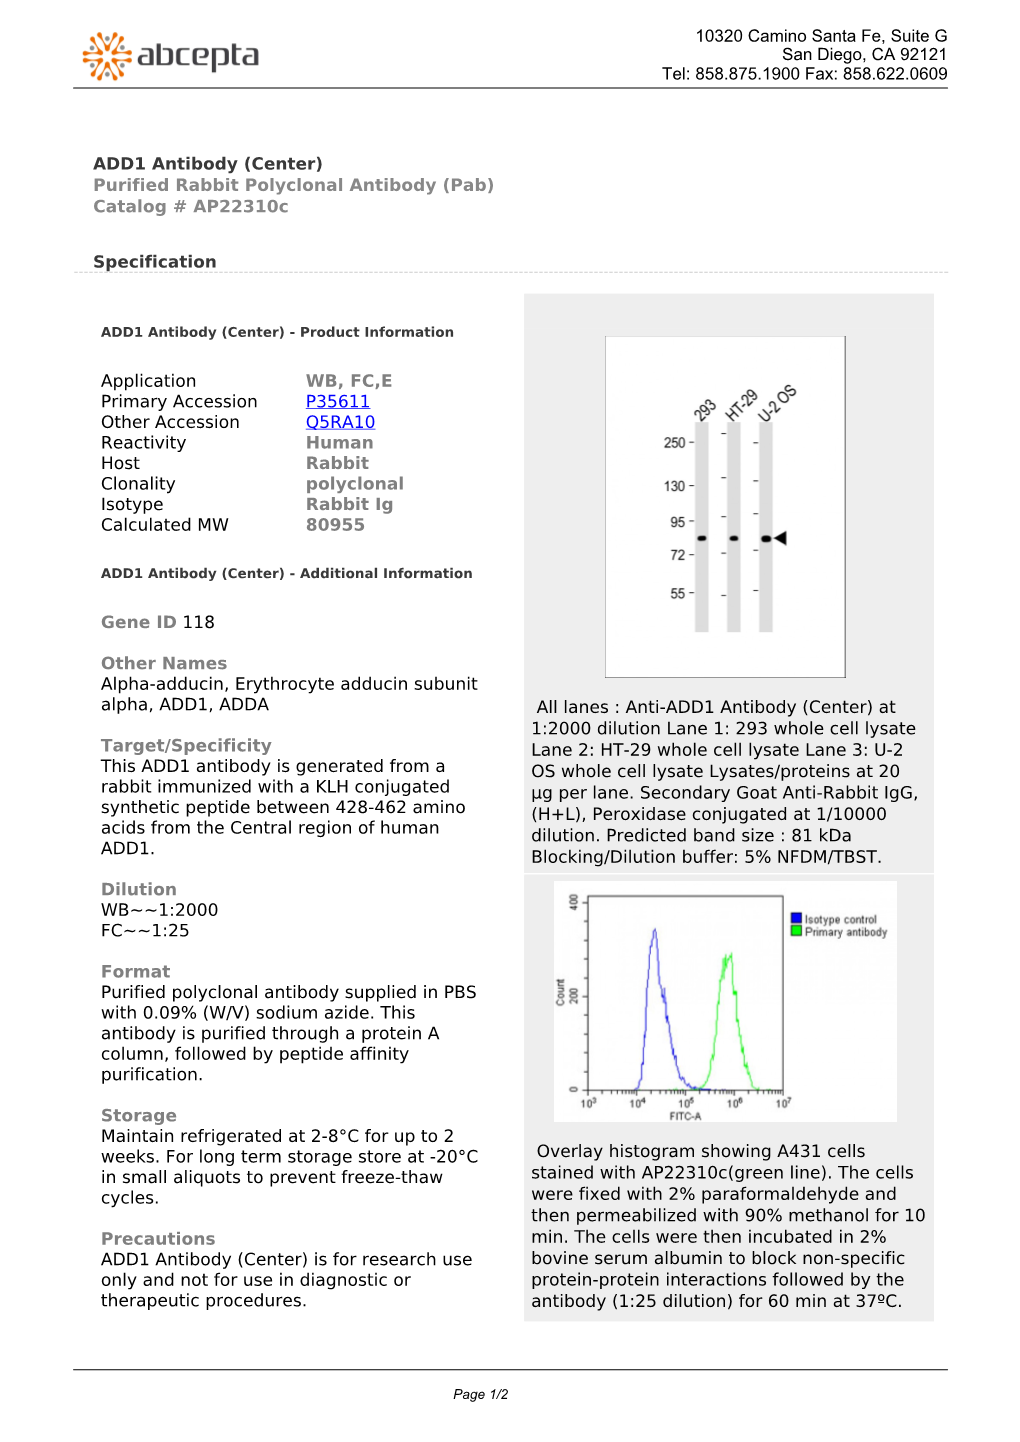 ADD1 Antibody (Center) Purified Rabbit Polyclonal Antibody (Pab) Catalog # Ap22310c